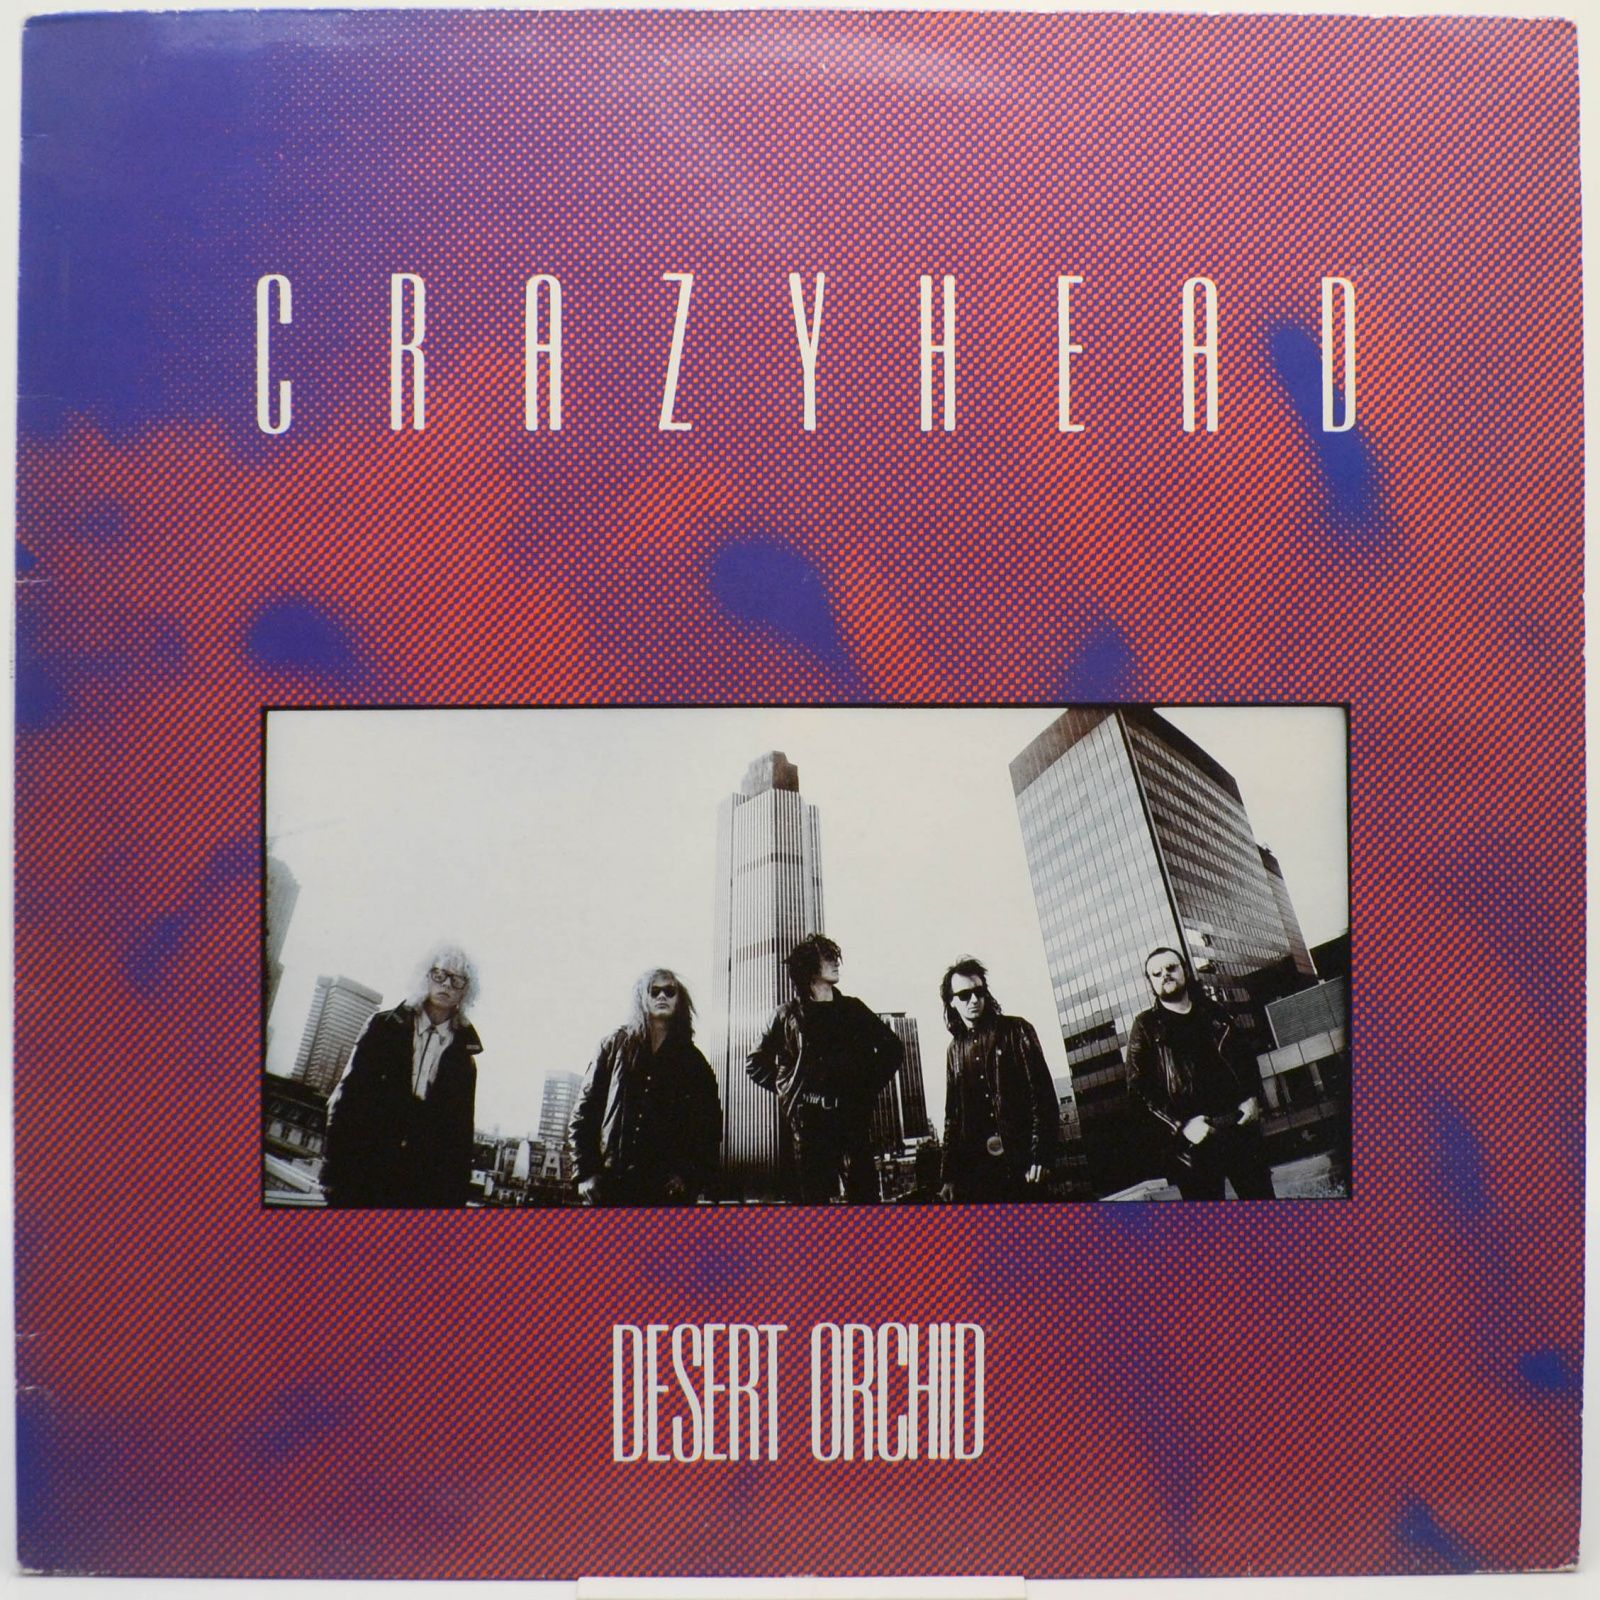 Crazyhead — Desert Orchid, 1988